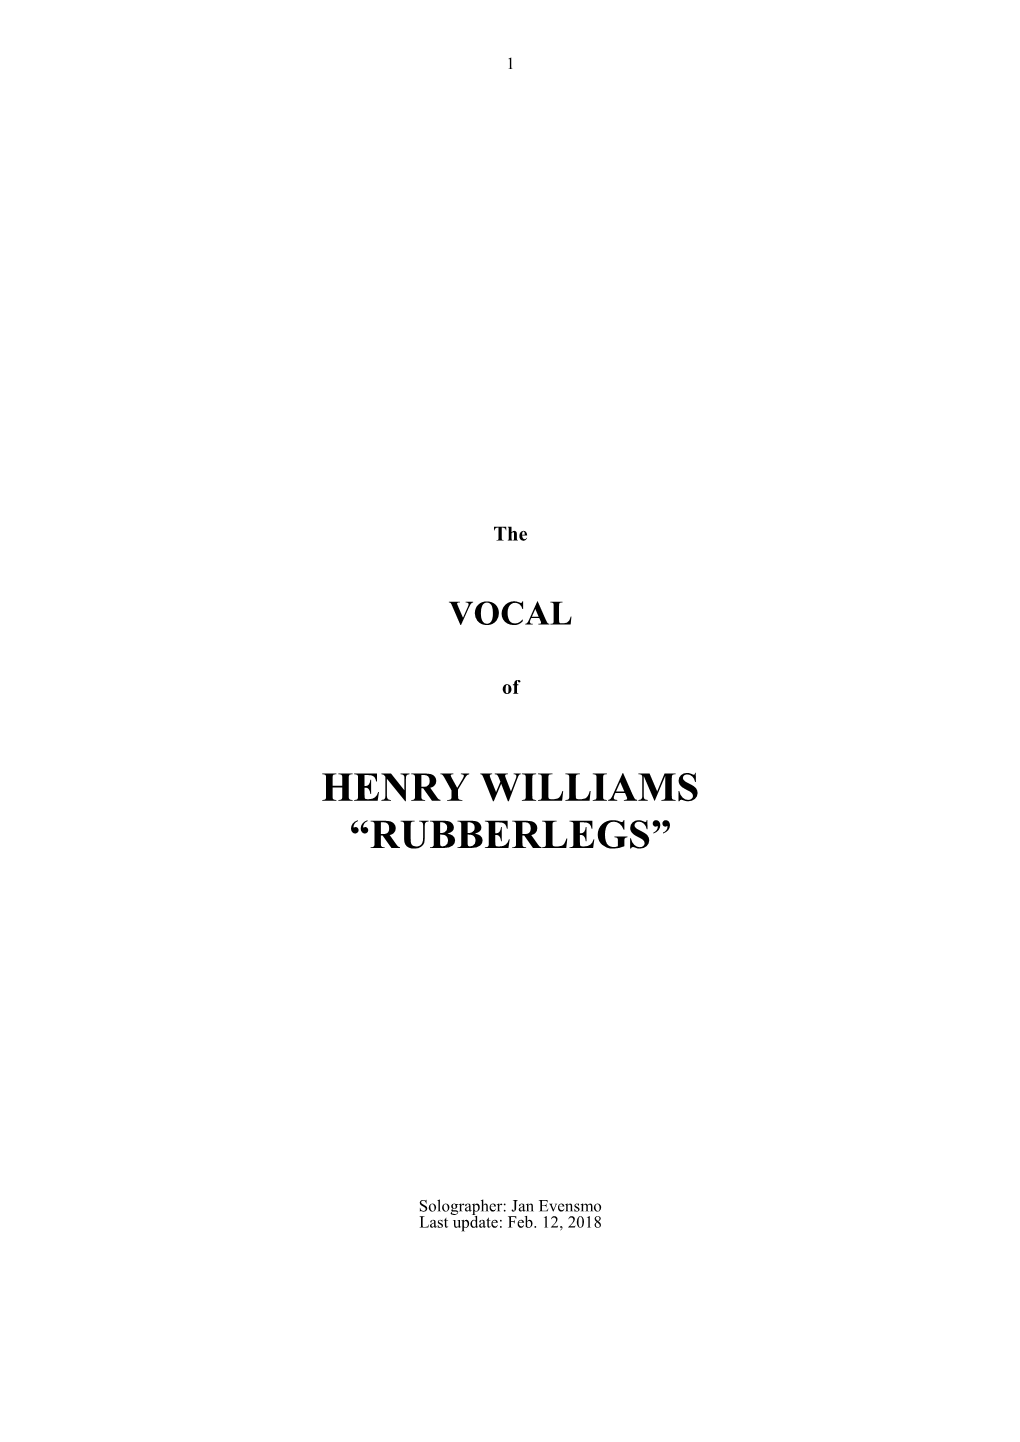 Henry Williams “Rubberlegs”